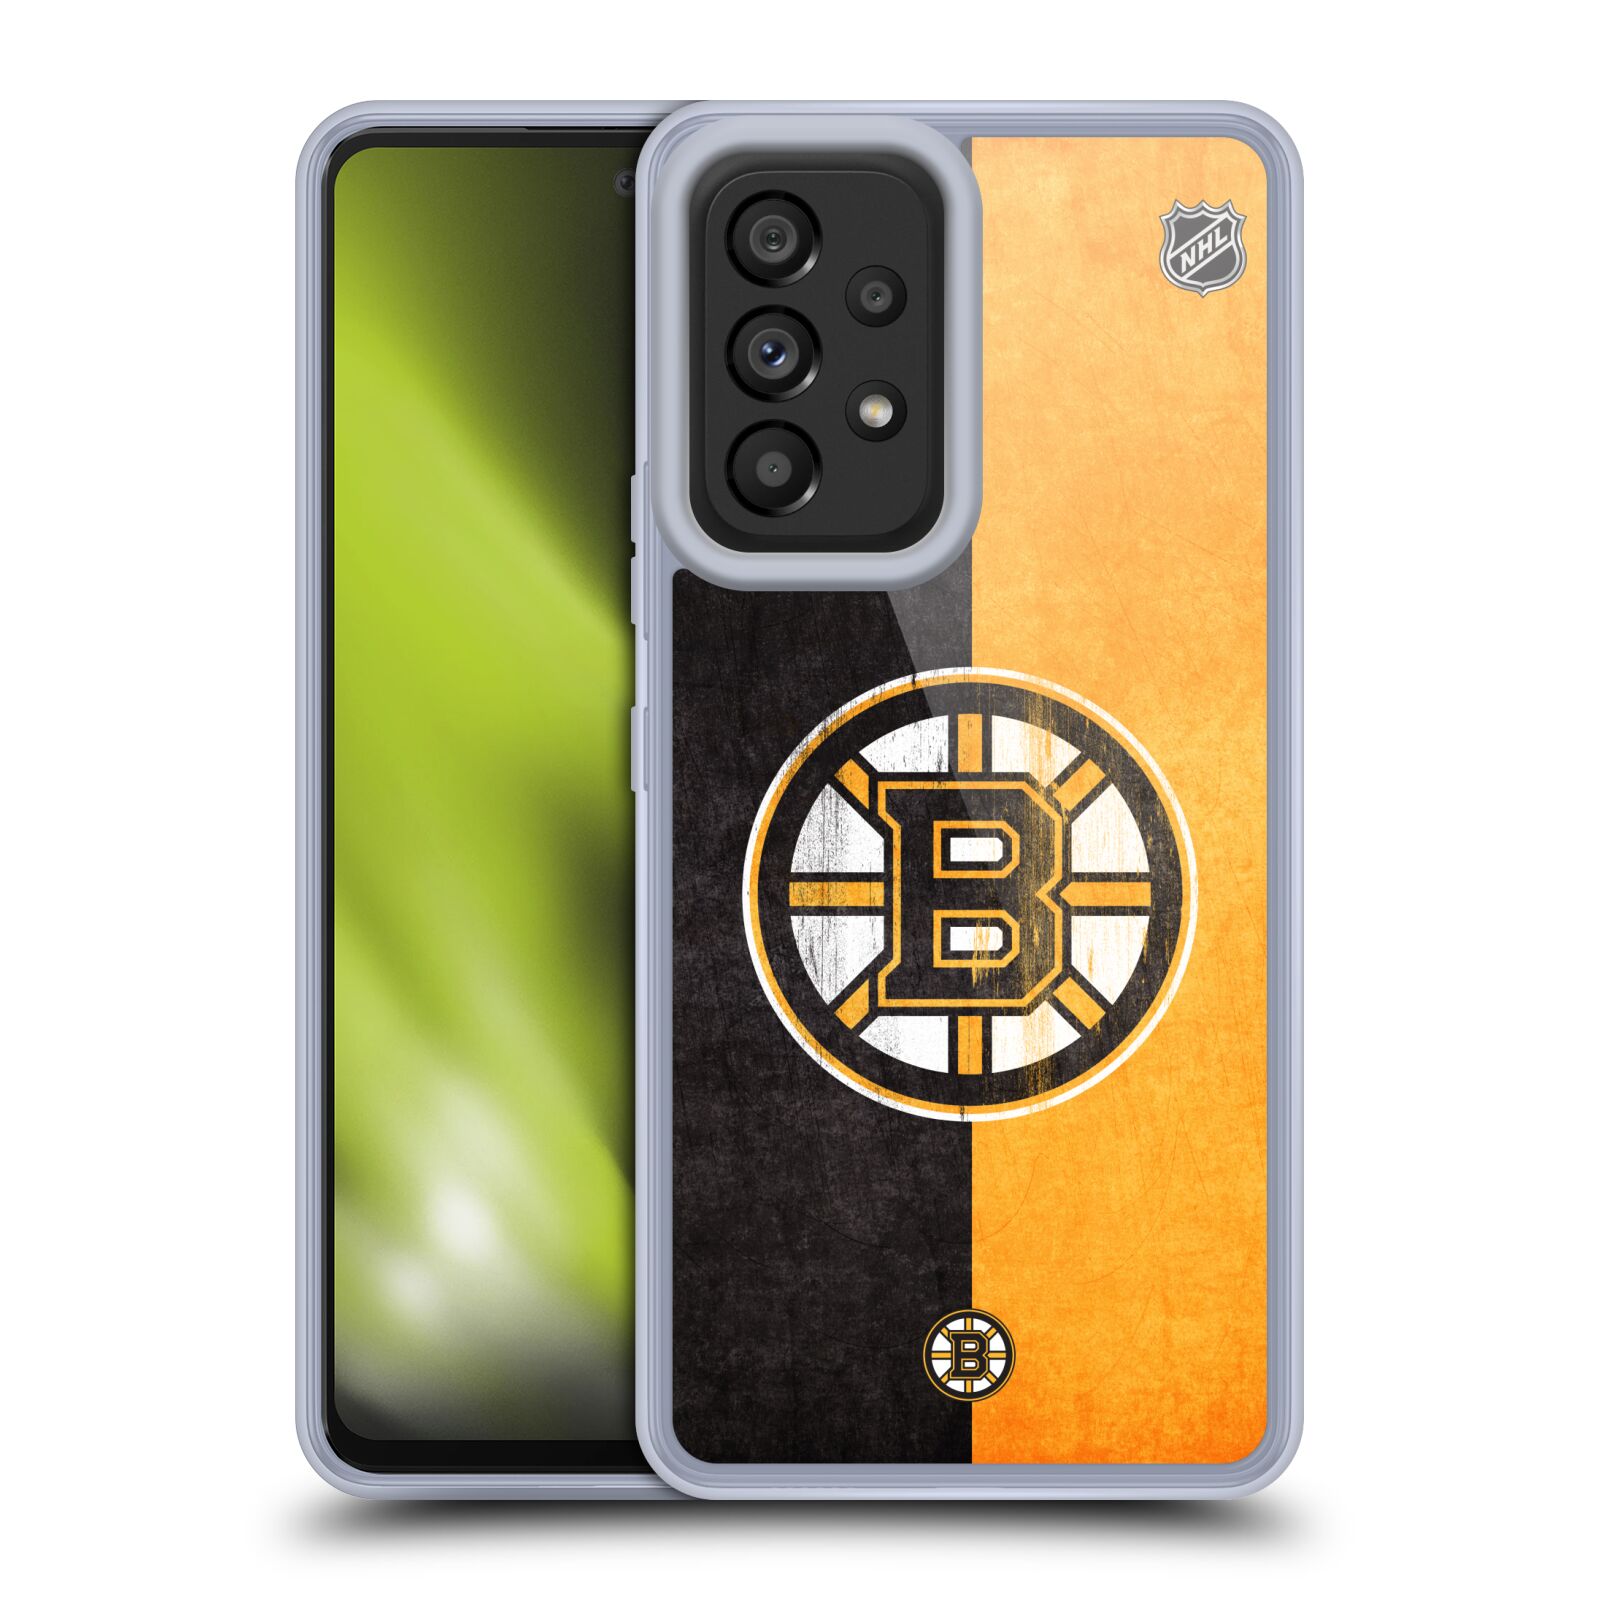 Silikonové pouzdro na mobil Samsung Galaxy A53 5G - NHL - Půlené logo Boston Bruins - AKCE (Silikonový kryt, obal, pouzdro na mobilní telefon Samsung Galaxy A53 5G s licencovaným motivem NHL - Půlené logo Boston Bruins)